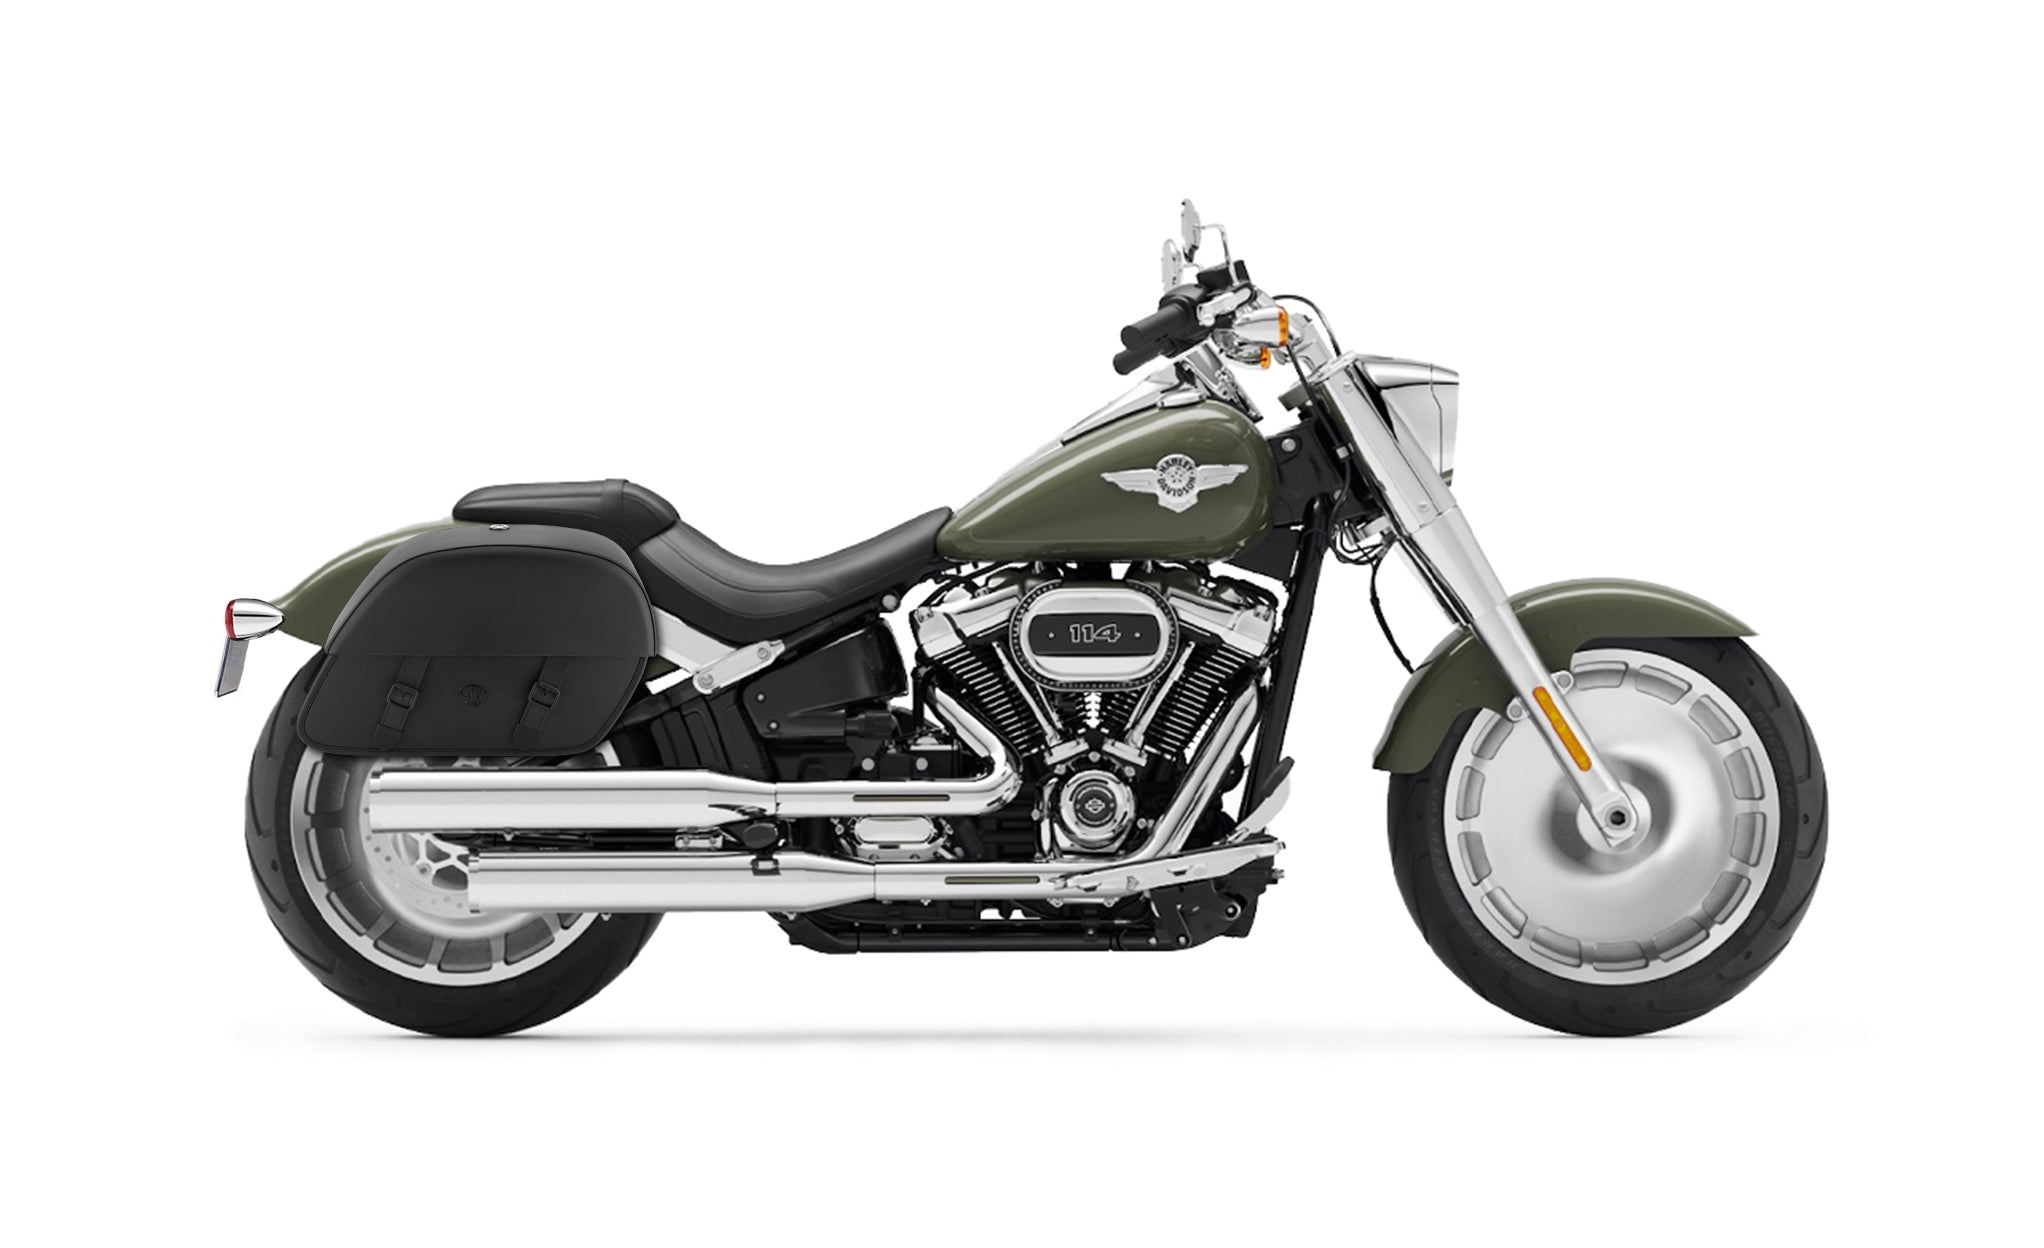 28L - Baelor Medium Motorcycle Saddlebags for Harley Softail Fatboy FLSTF/I @expand